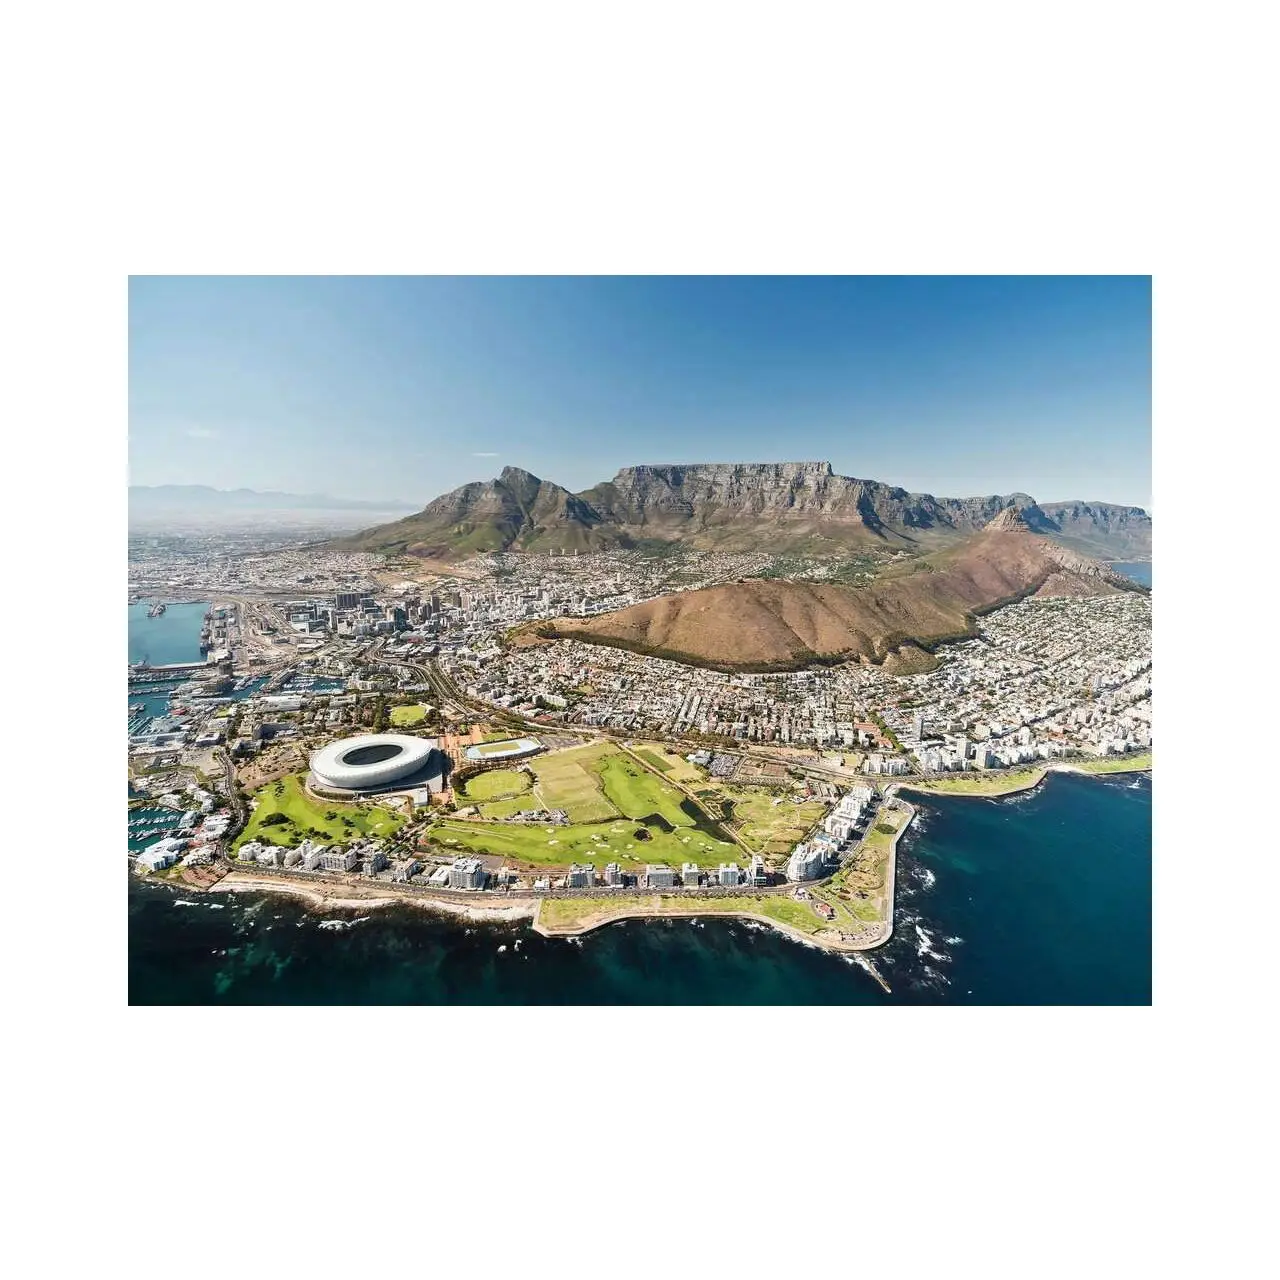 Puzzle Kapstadt S眉dafrika 1000 Teile